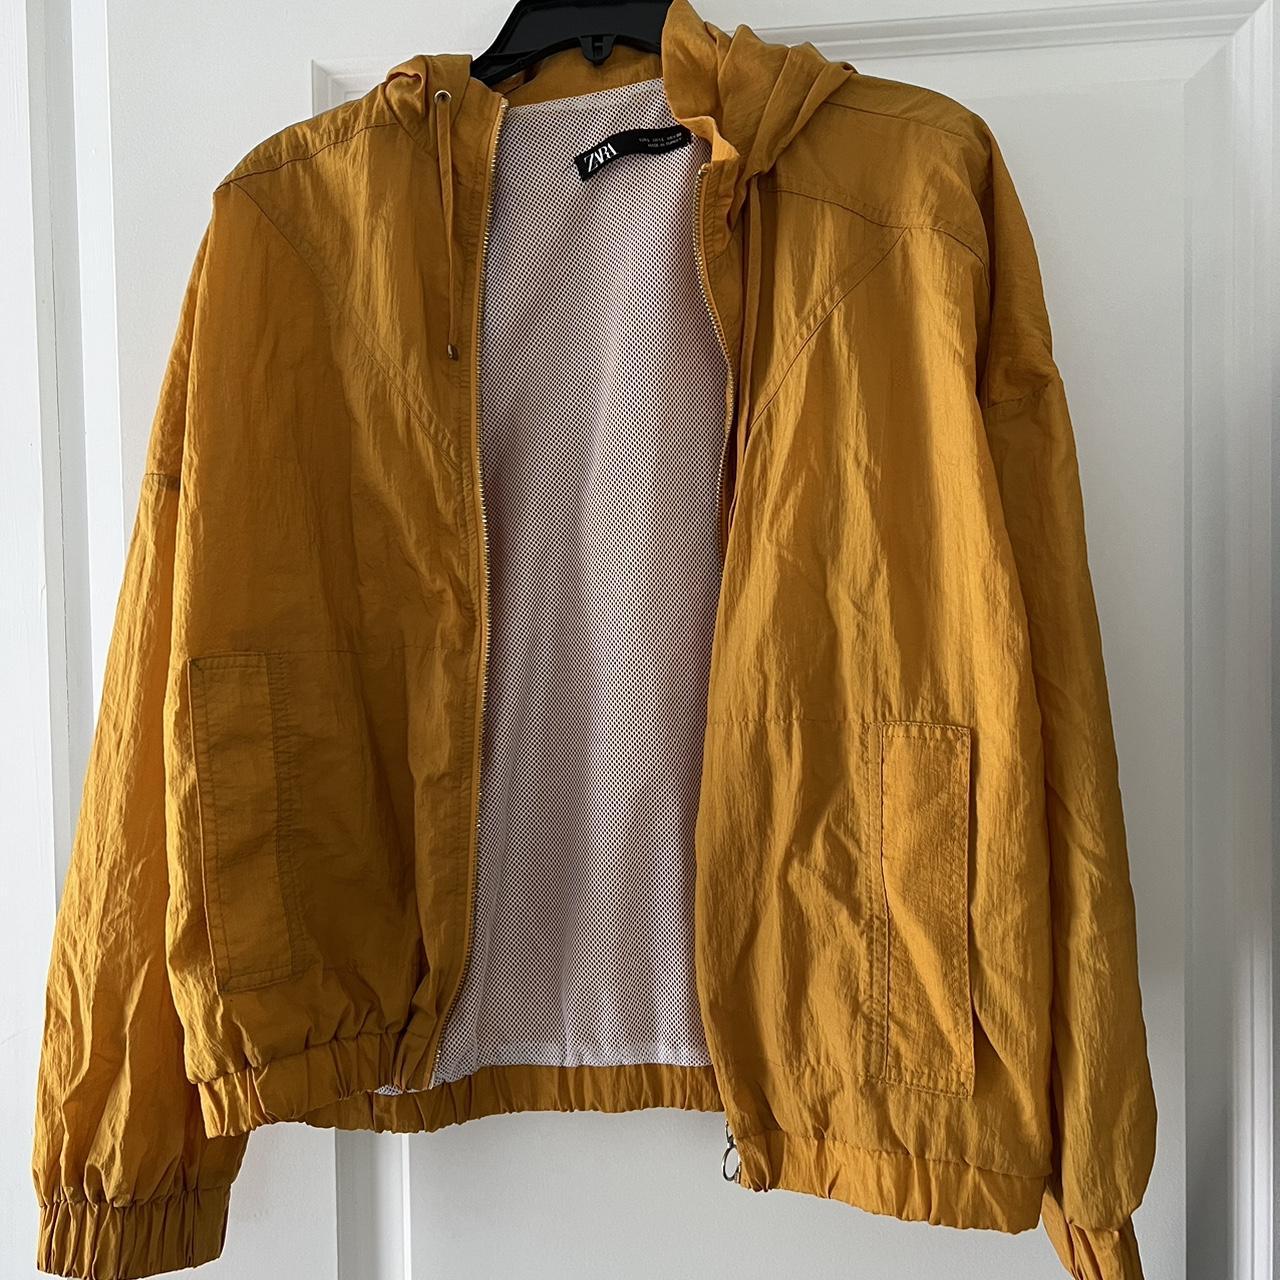 Zara Women's Yellow Jacket | Depop